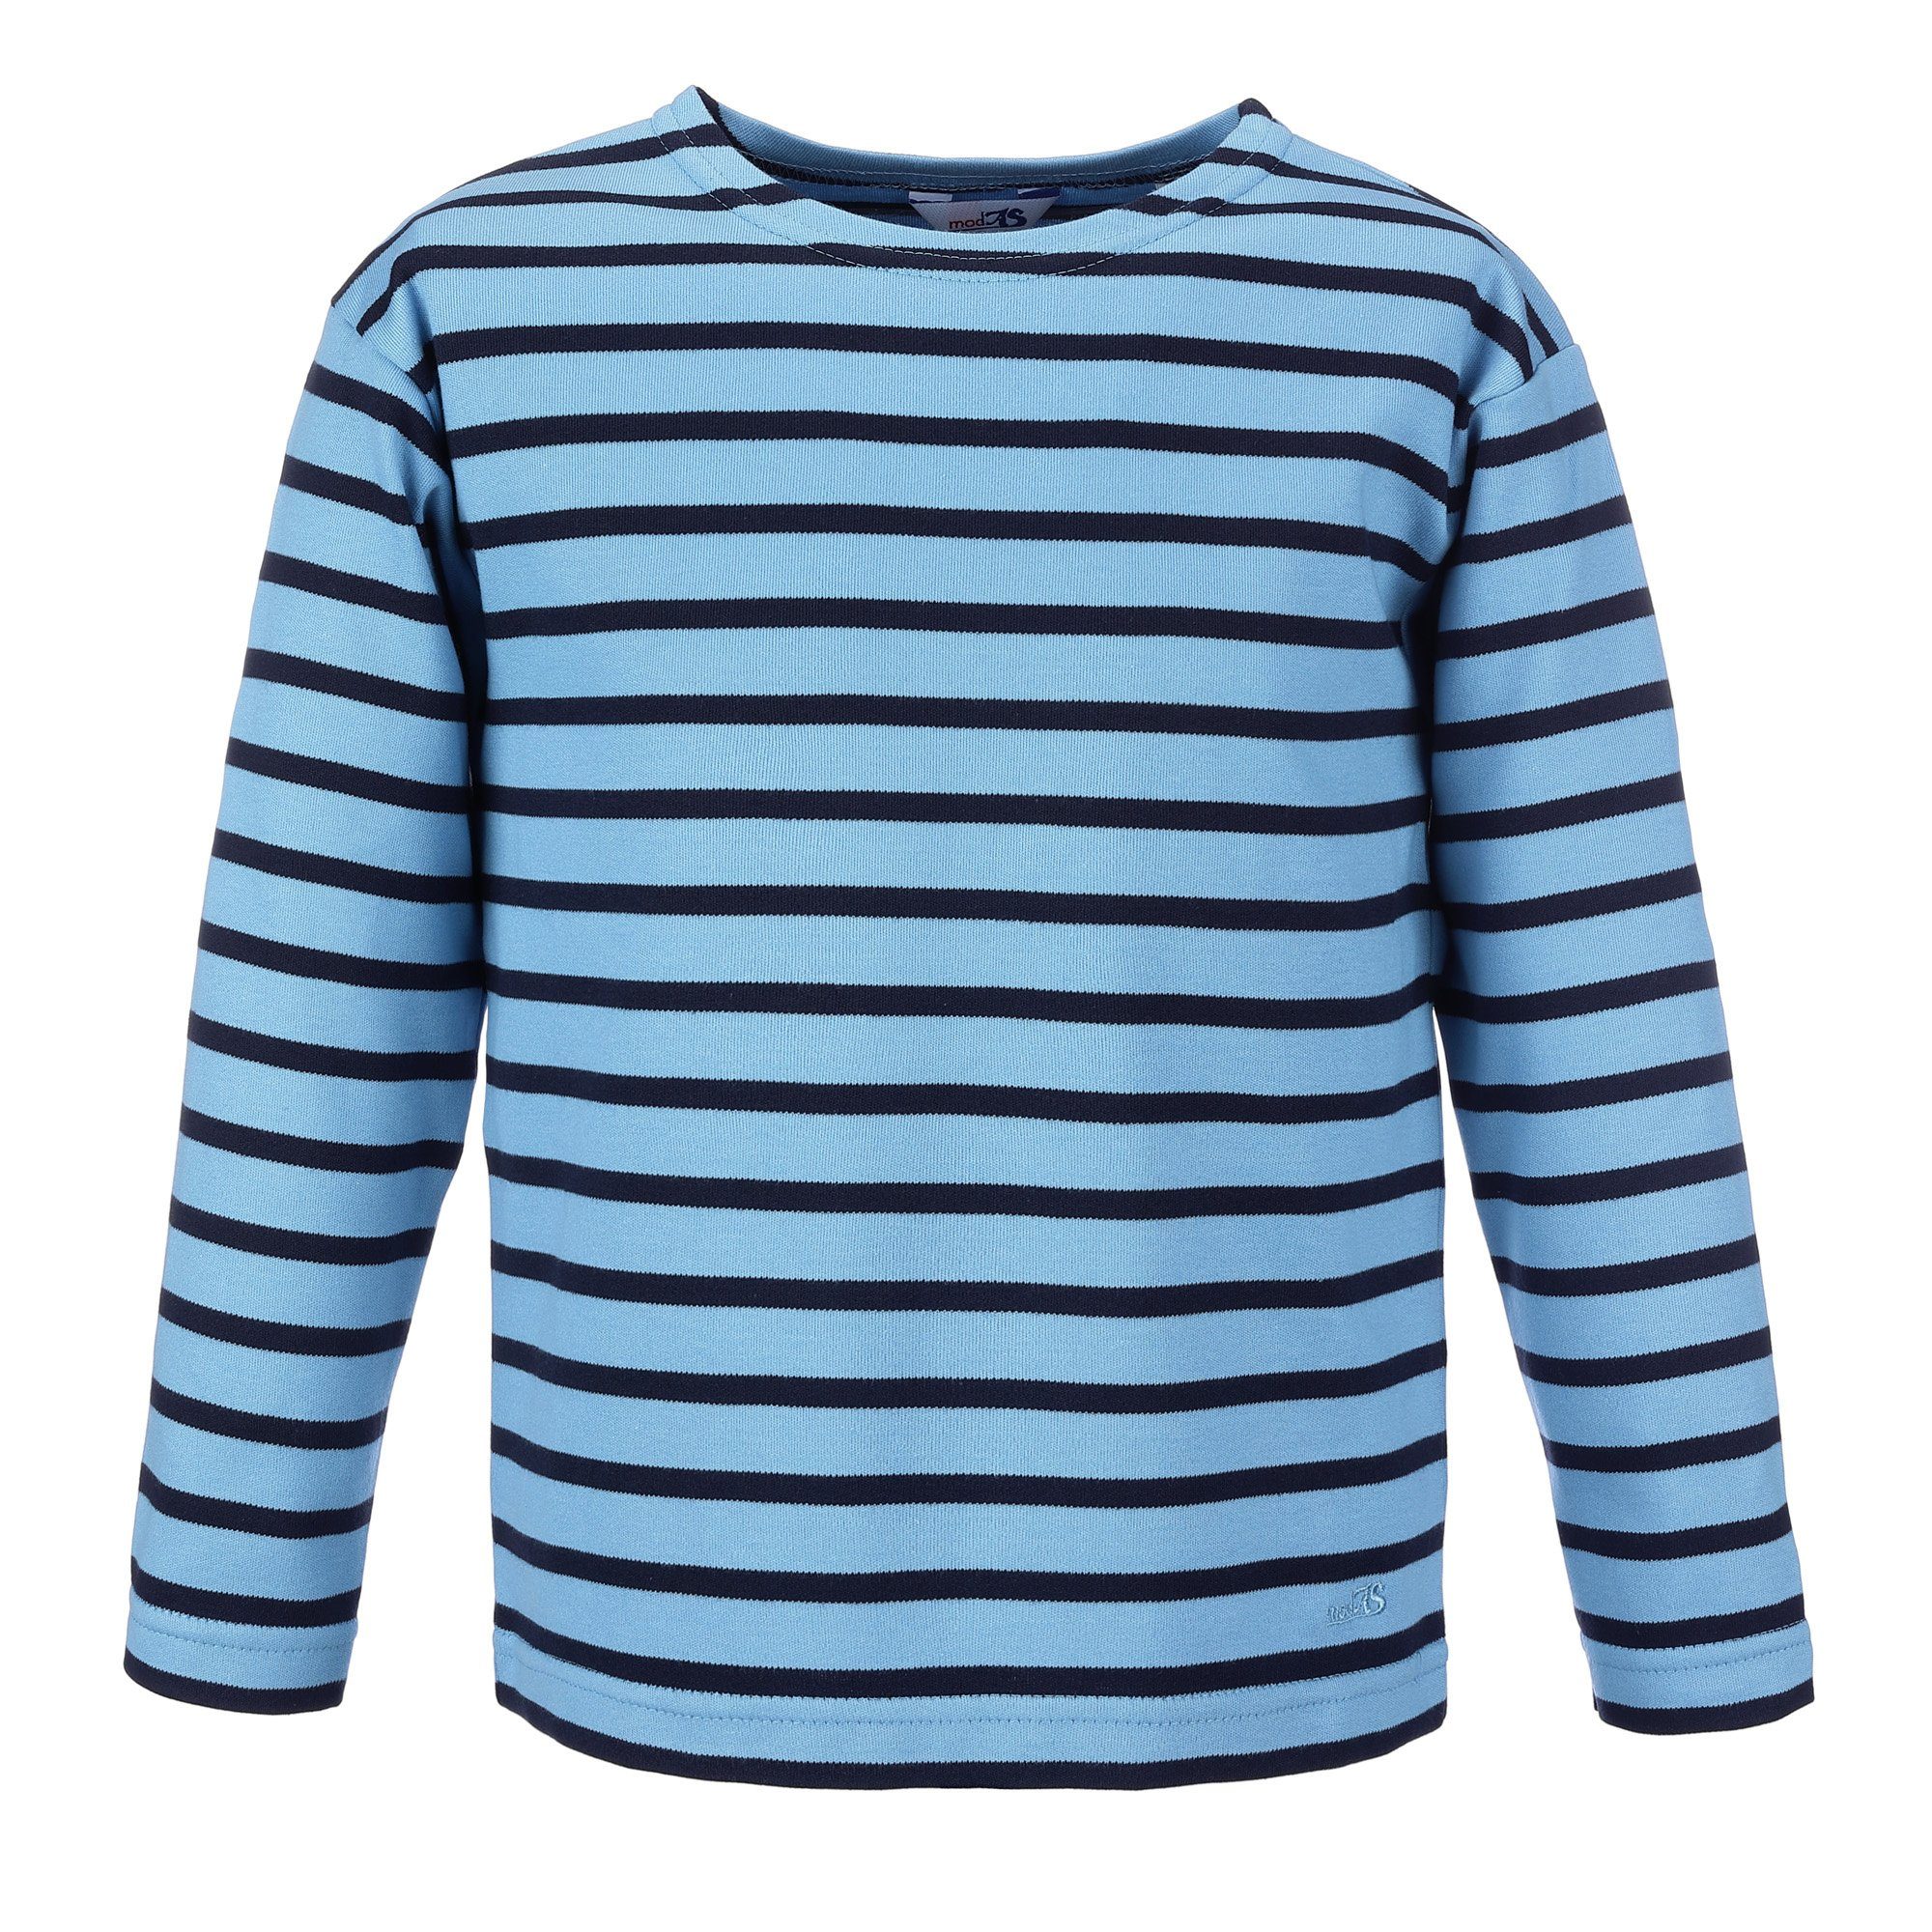 modAS Langarmshirt Bretonisches Shirt für Kinder - Longsleeve Streifenshirt  Mädchen Jungen aus Baumwolle